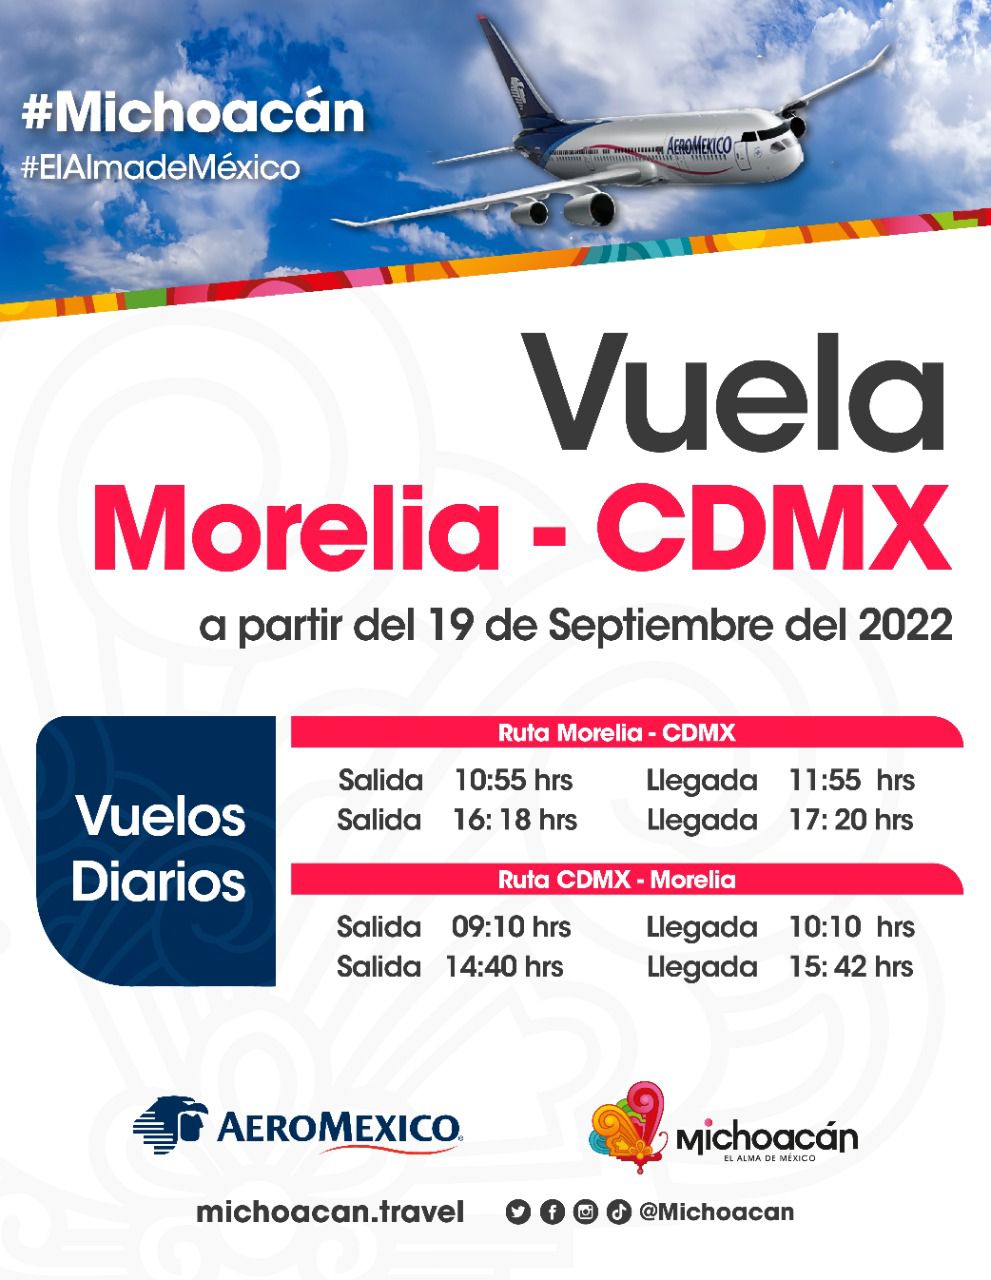 ¿Qué aerolinea viaja de México a Morelia